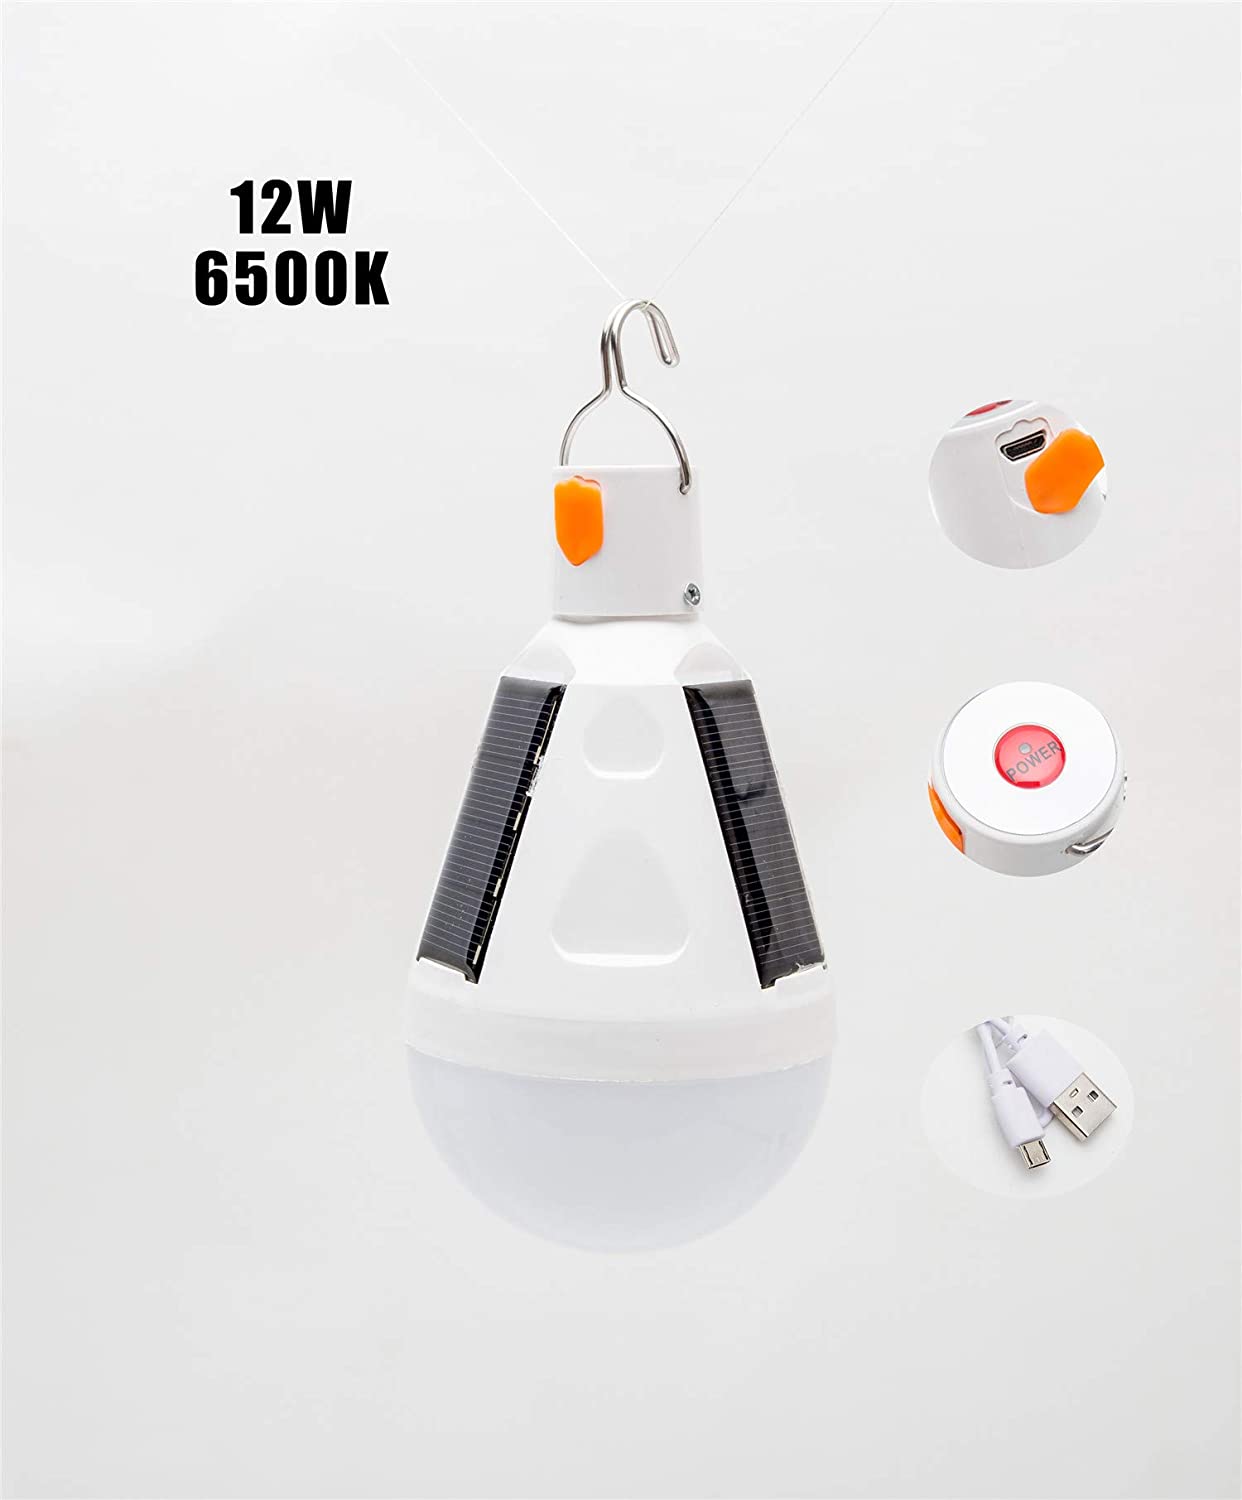 12W Solar Light Bulb 6500K Portable Solar Emergency Bulb Waterproof 3 Lighting Modes USB Rechargeable 1